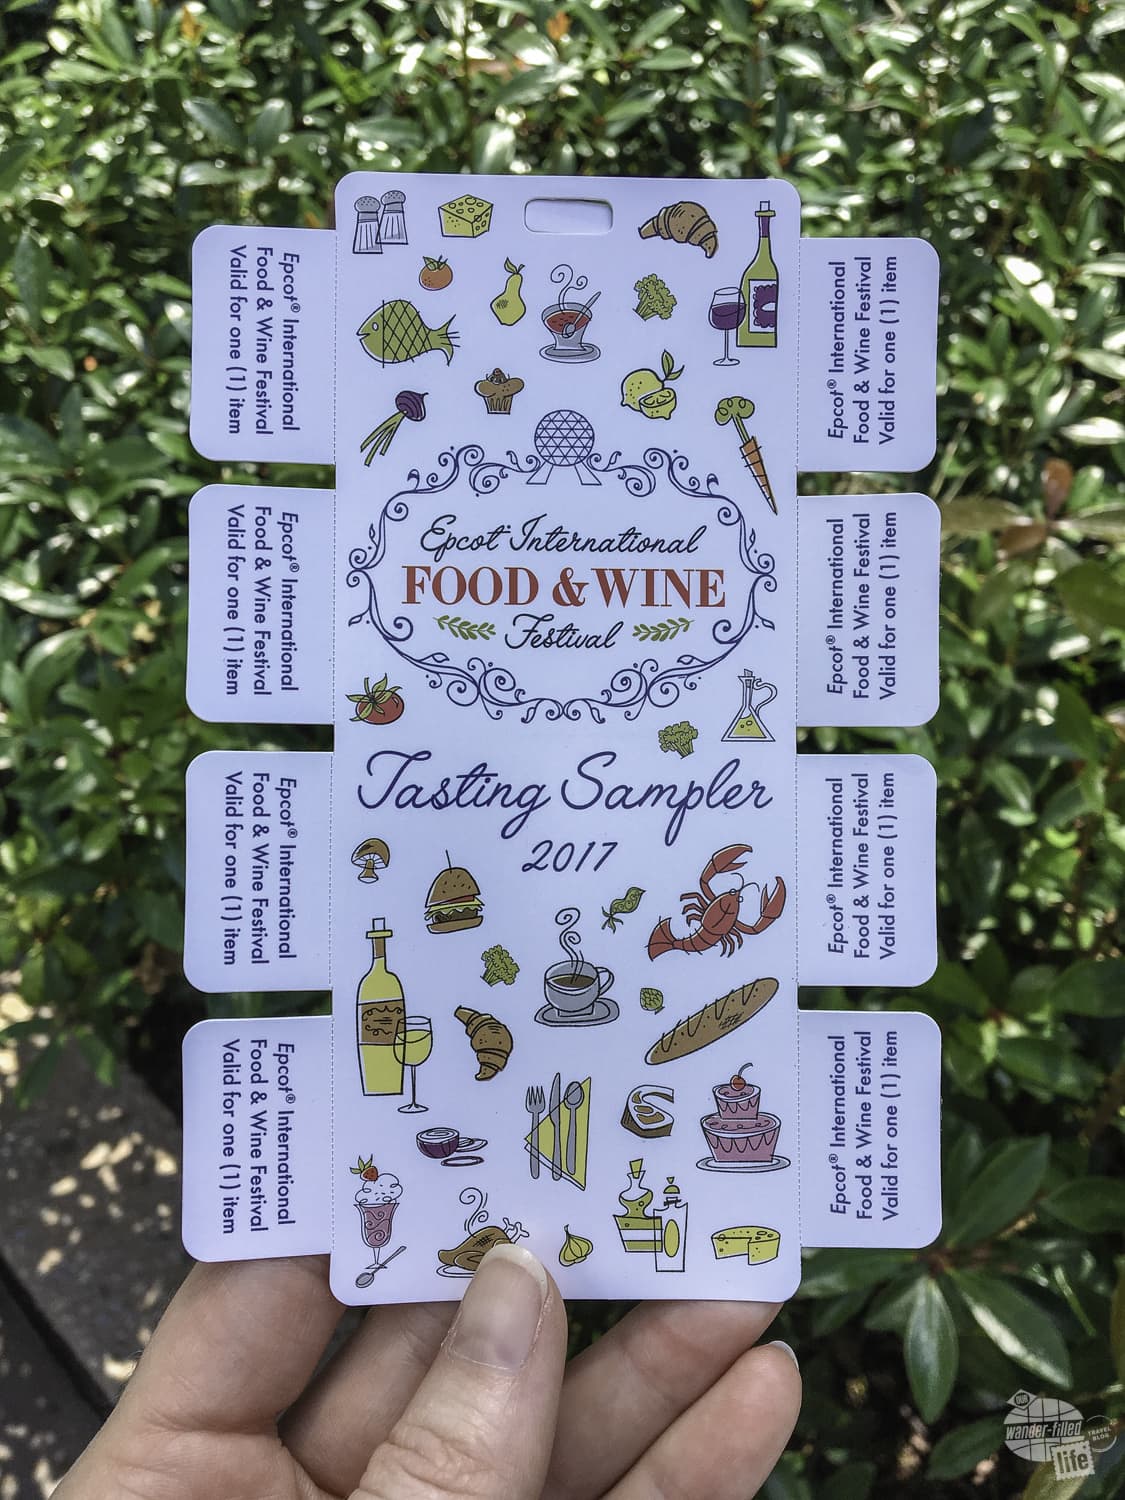 Food and Wine Festival Tasting Sampler vouchers.